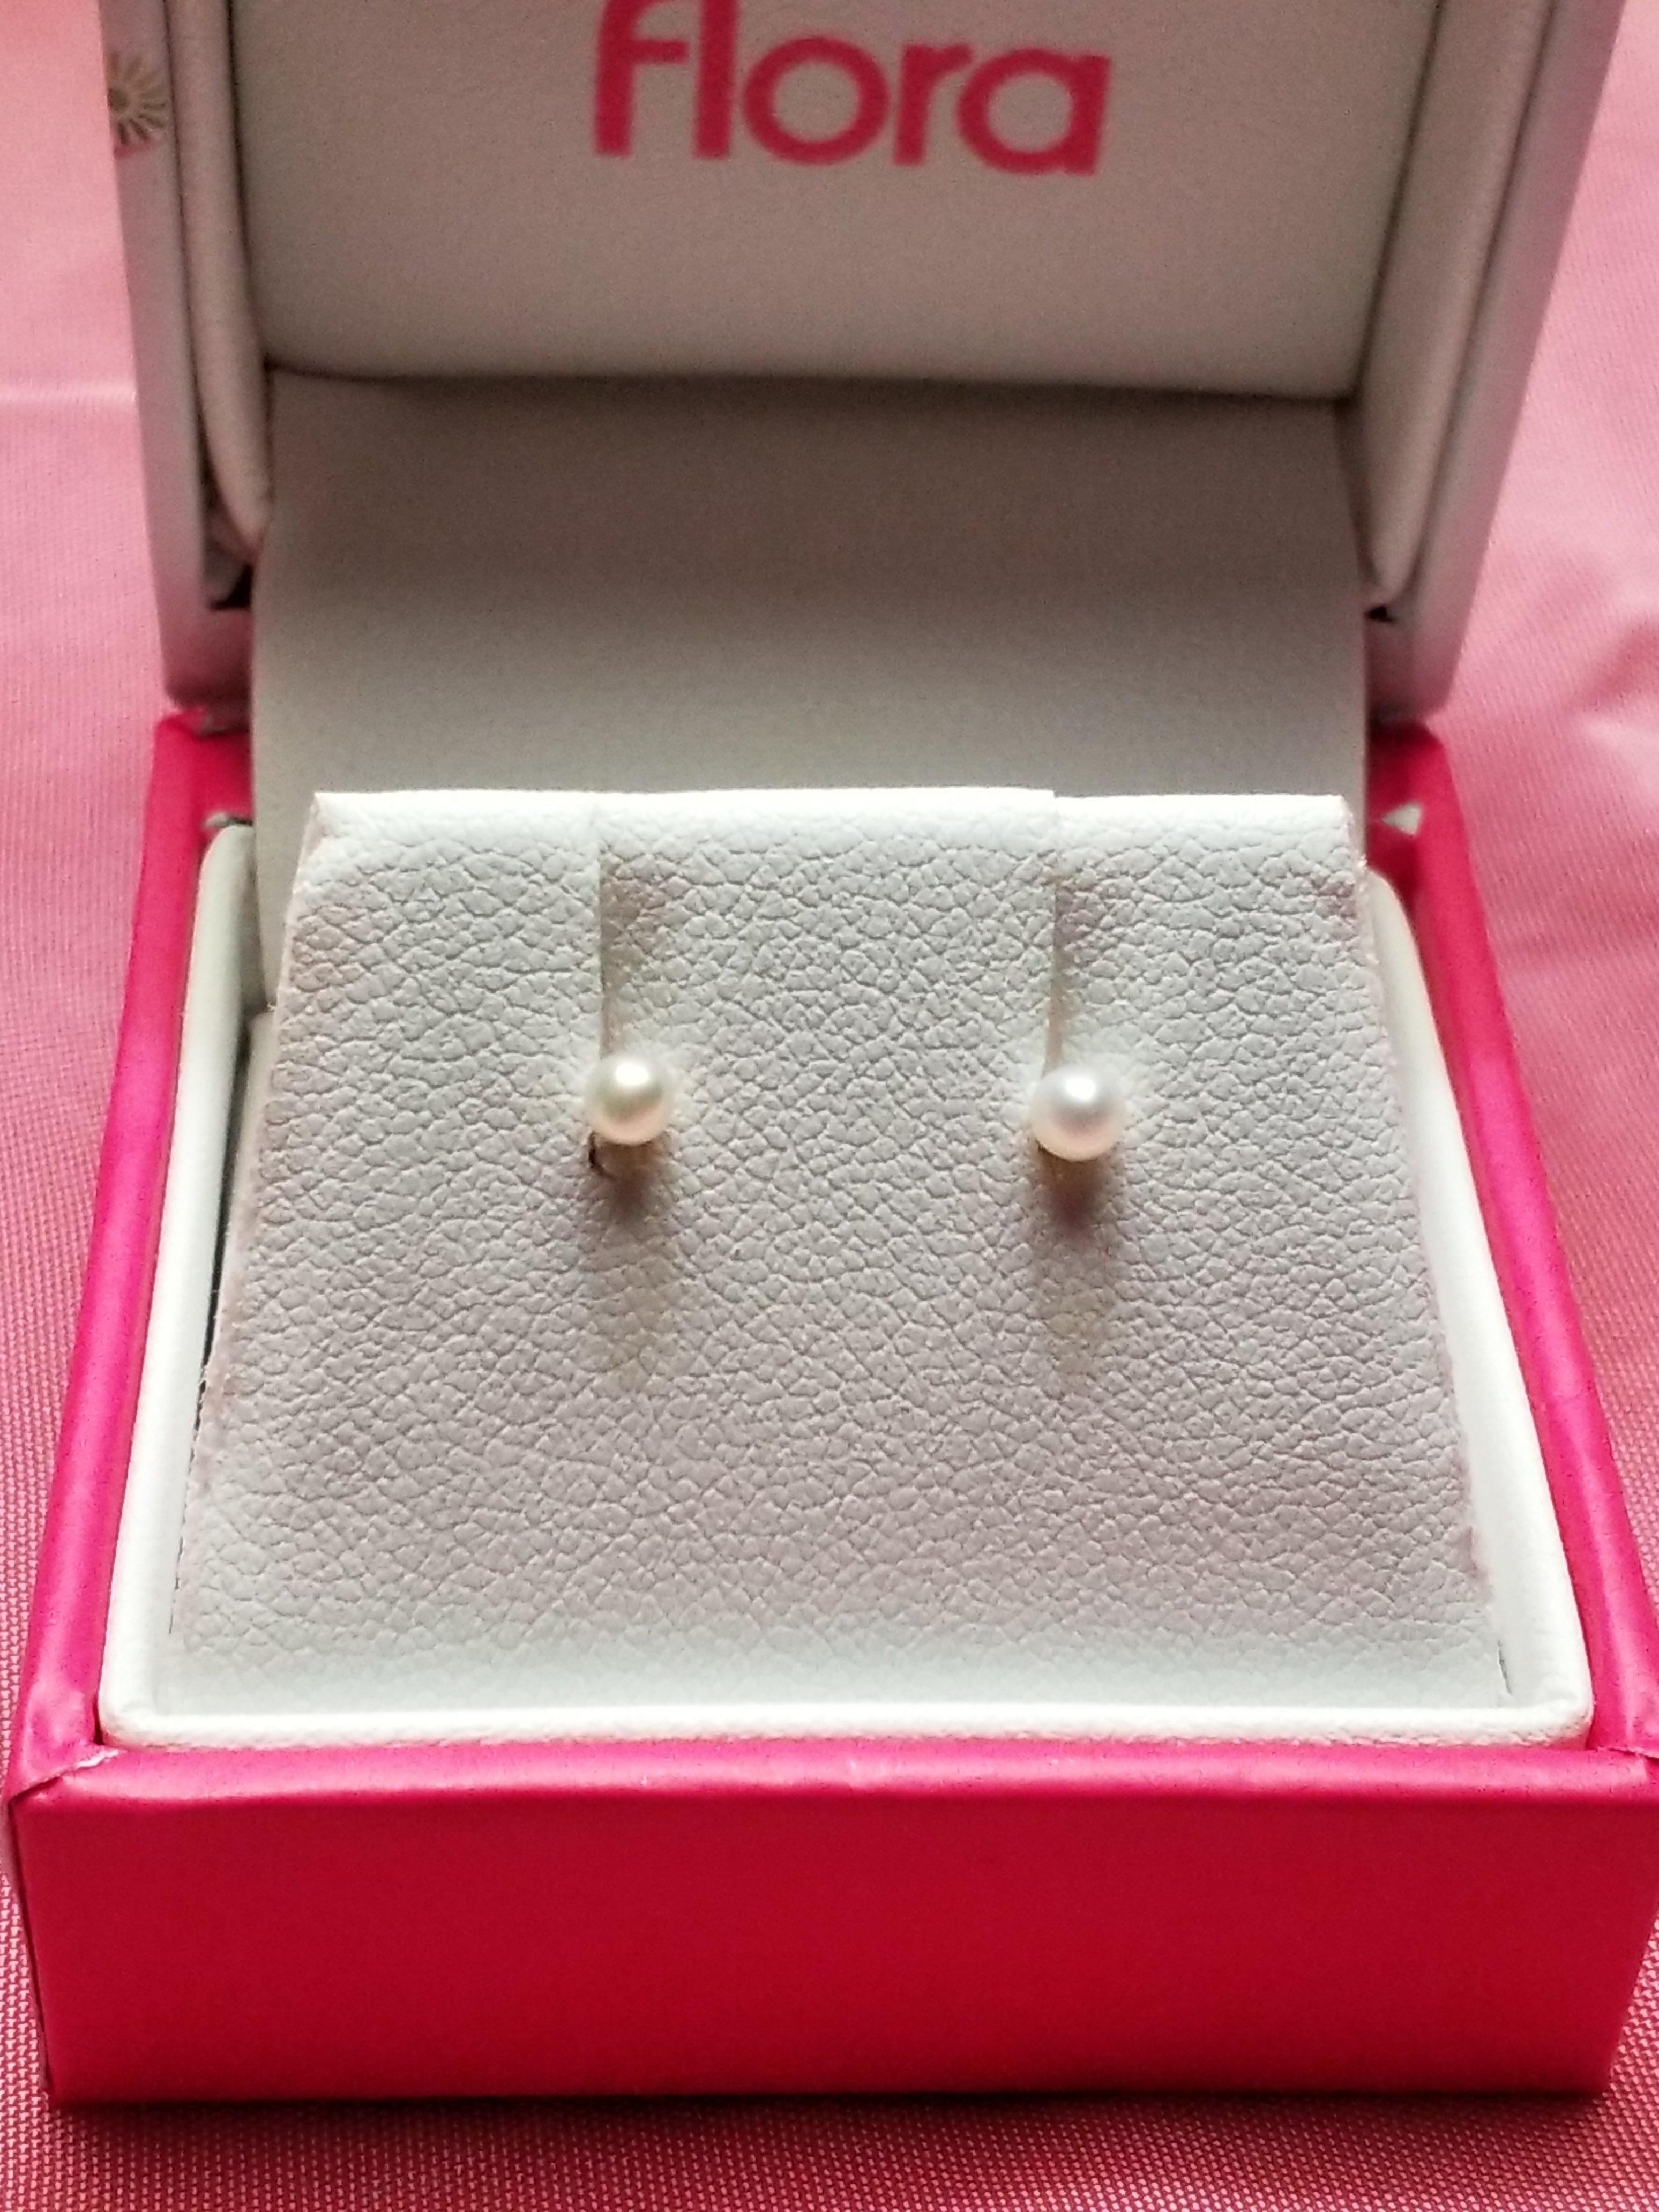 Children's 10kt Earrings - Pearl Stud - Screw Backs